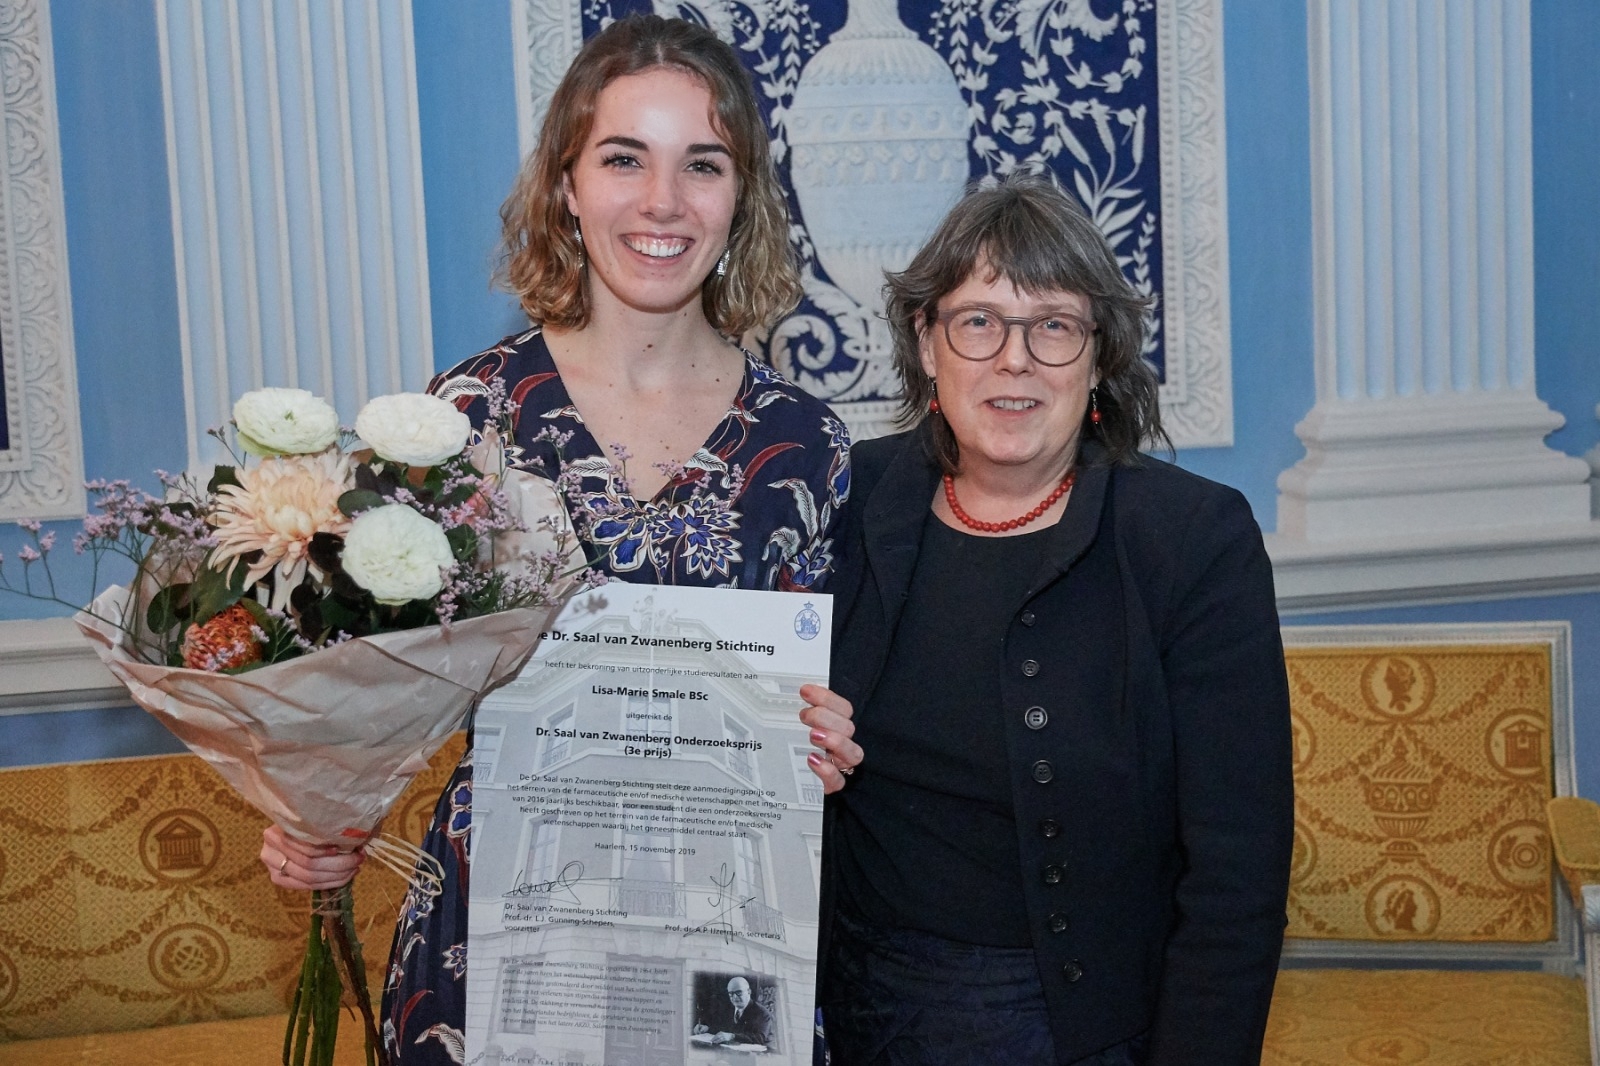 Pharmacy student Lisa Marie Smale awarded Dr Saal van Zwanenberg Prize